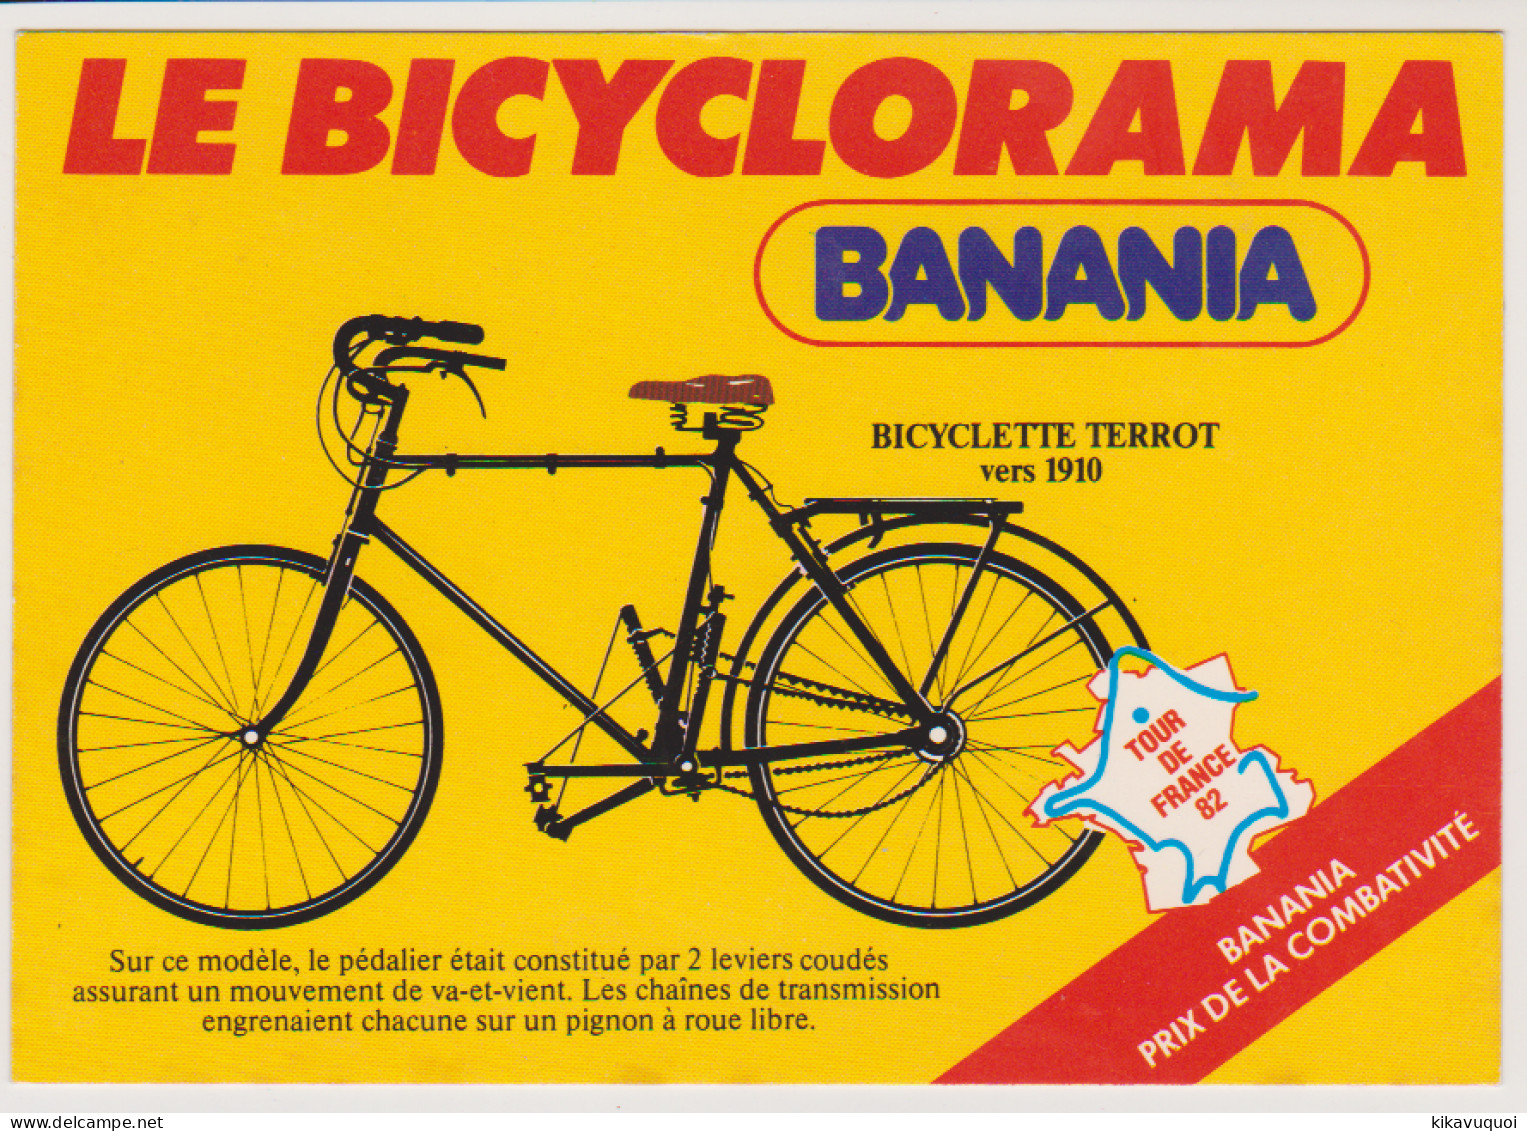 BANANIA -  69eme TOUR DE FRANCE - LE BICYCLORAMA - VELO - CYCLE - CARTE POSTALE ANCIENNE - Motorfietsen